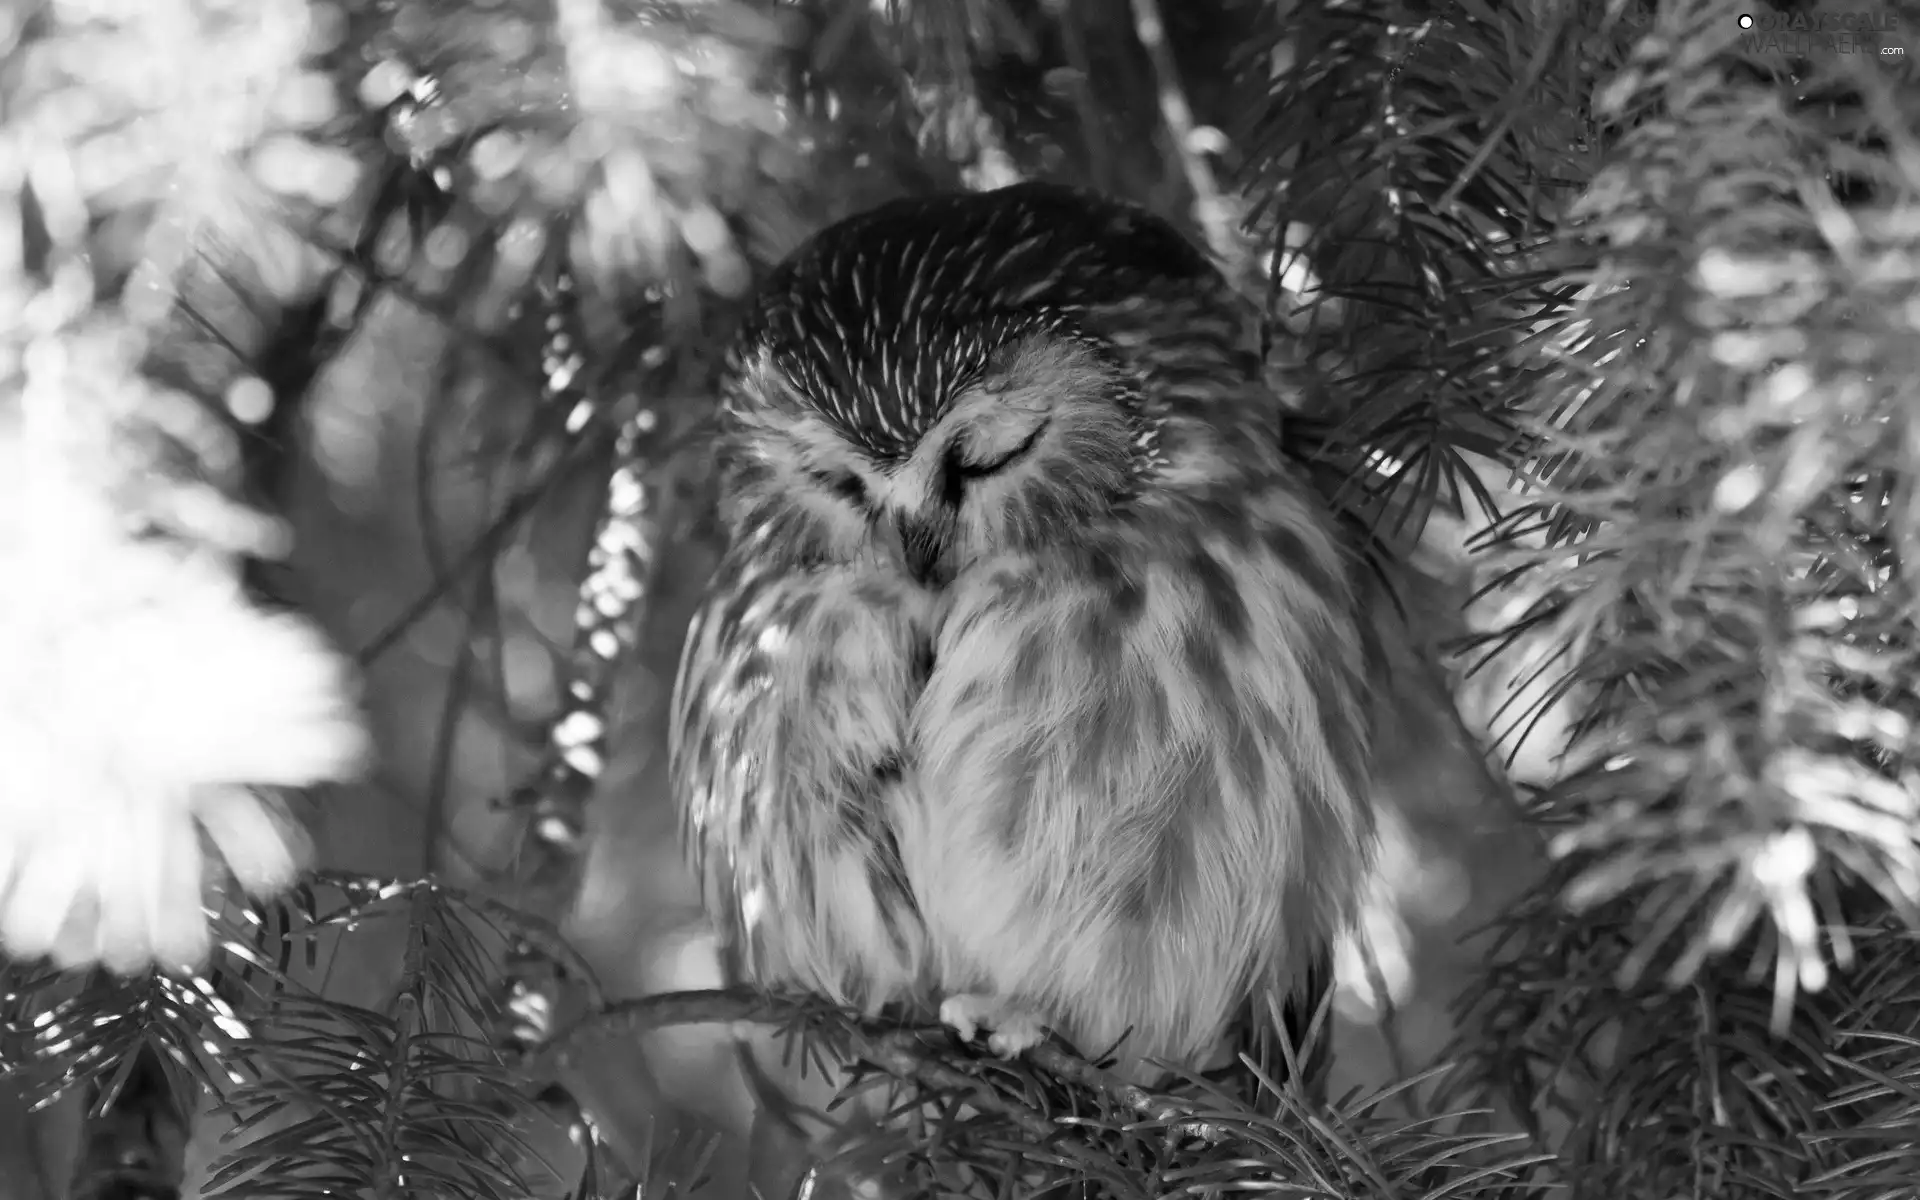 trees, the sleeping, owl